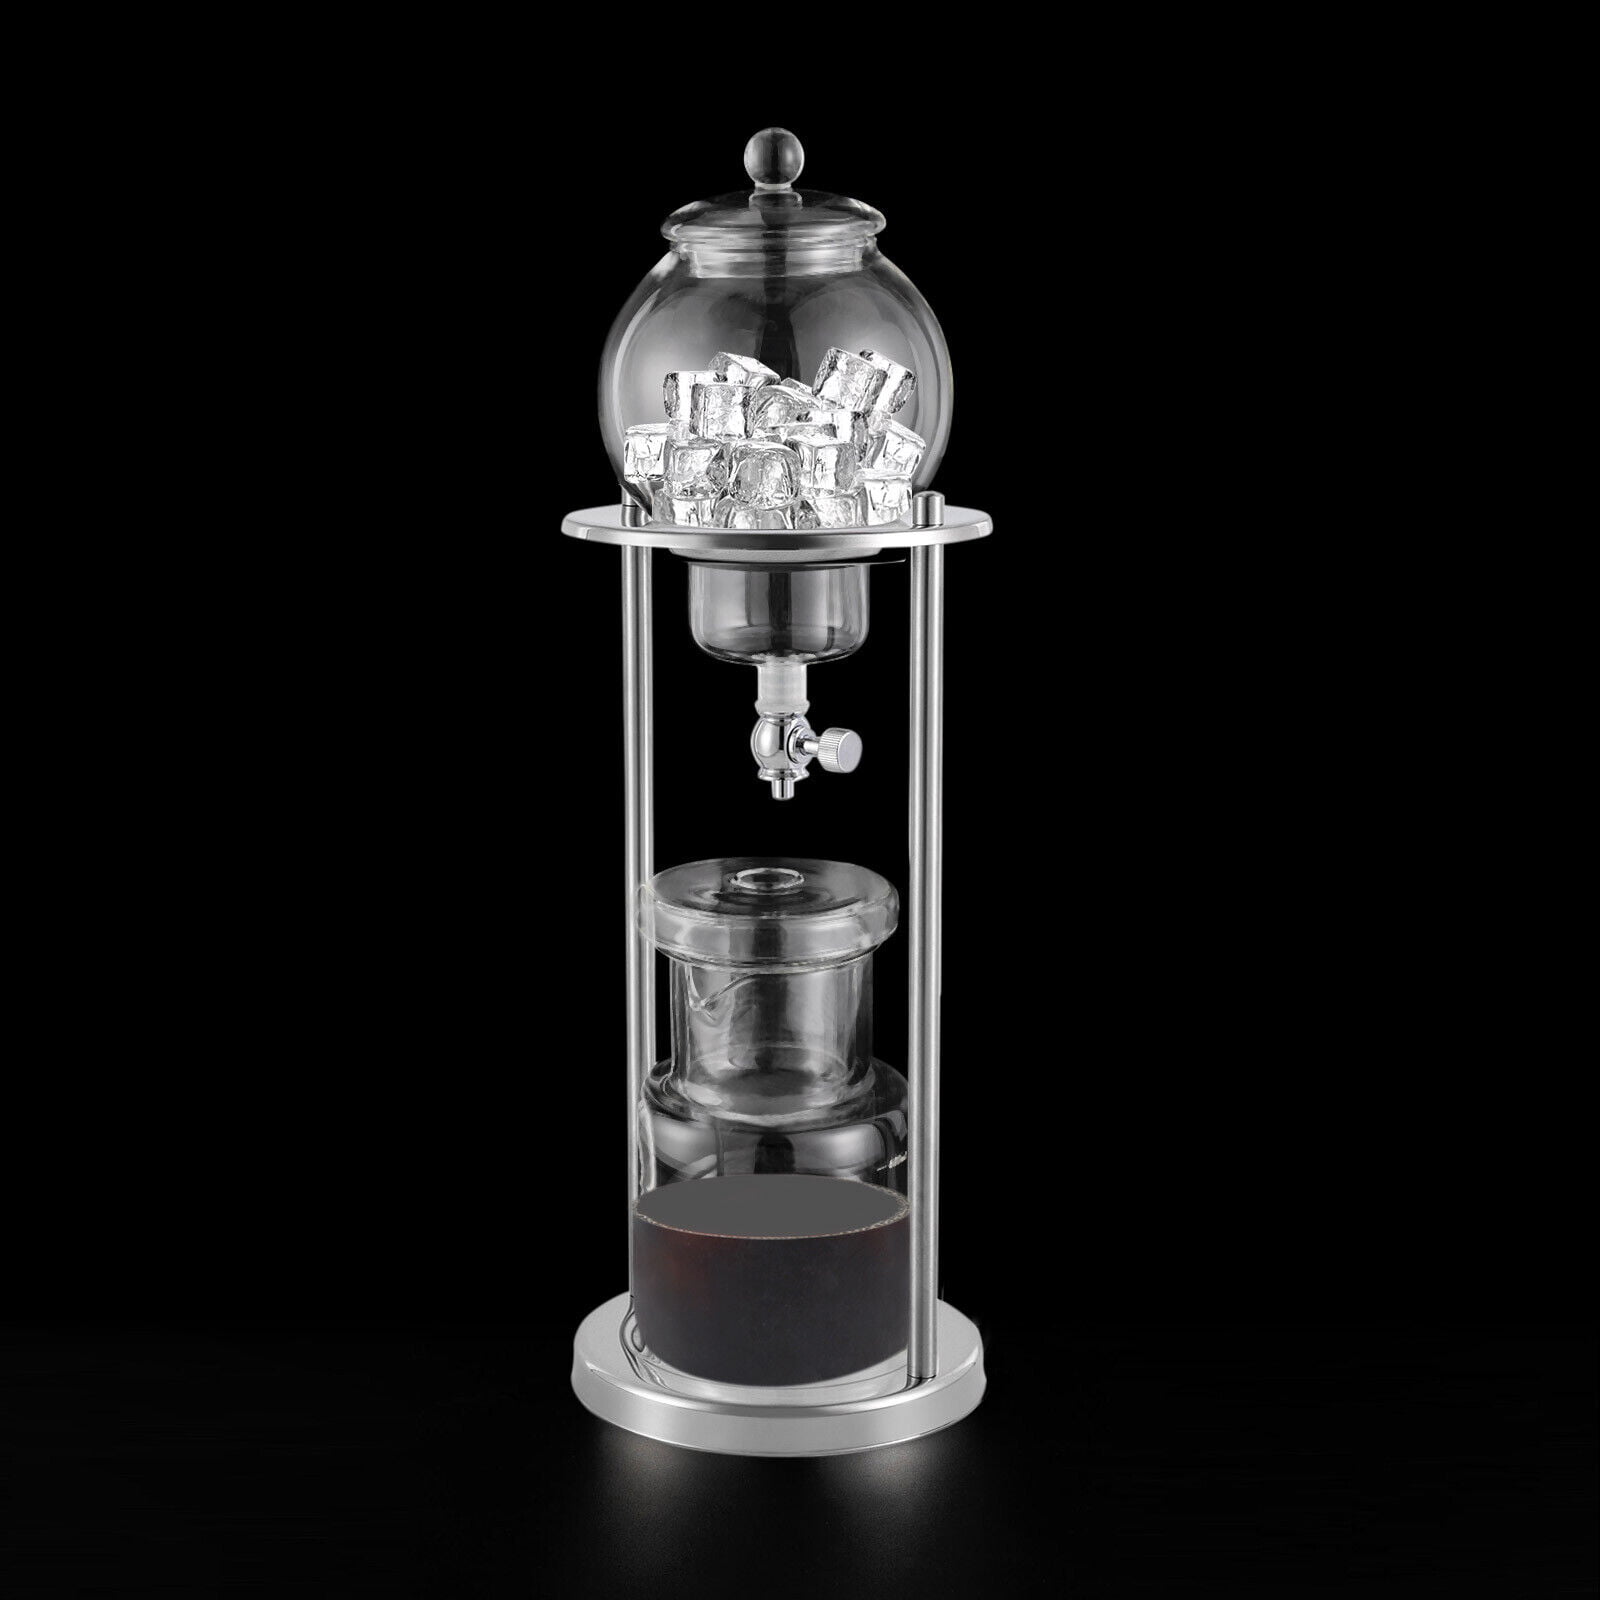 Nispira Modern Ice Cold Brew Dripping Coffee Maker Tower, 600 ml in Si